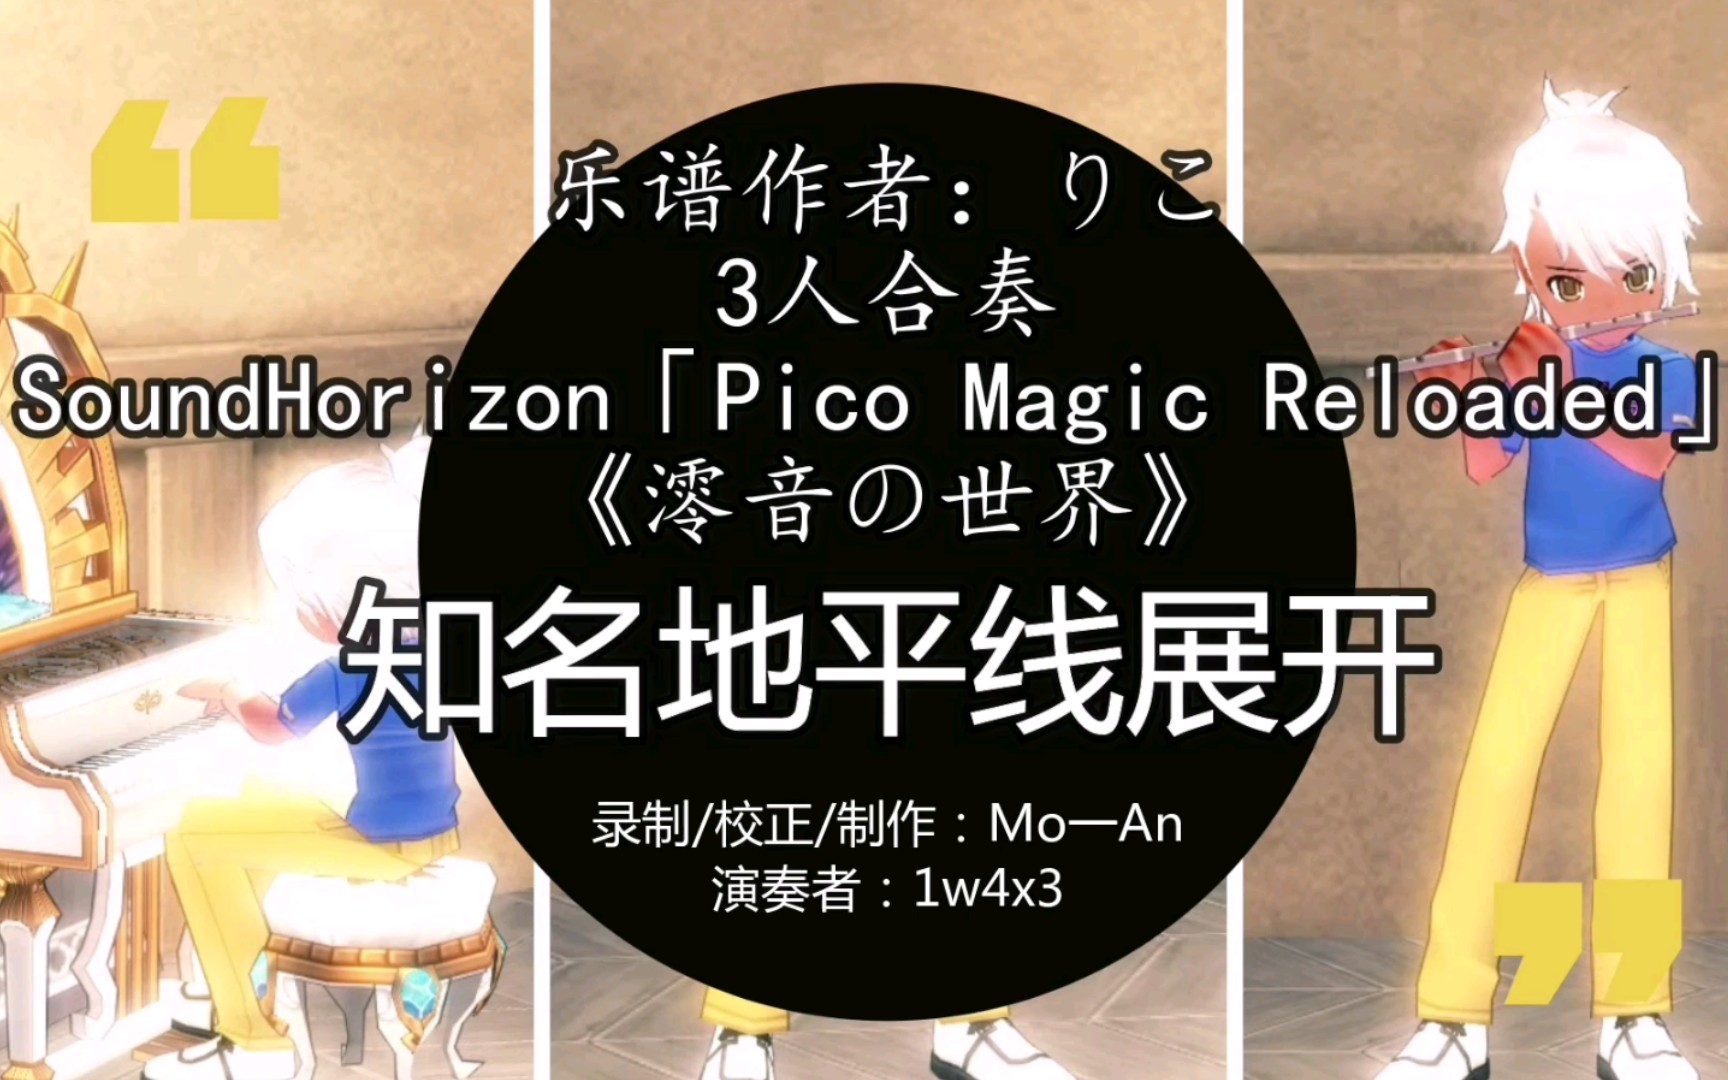 Mo一An】《洛奇/演奏视频》SoundHorizon「Pico Magic Reloaded」澪音の